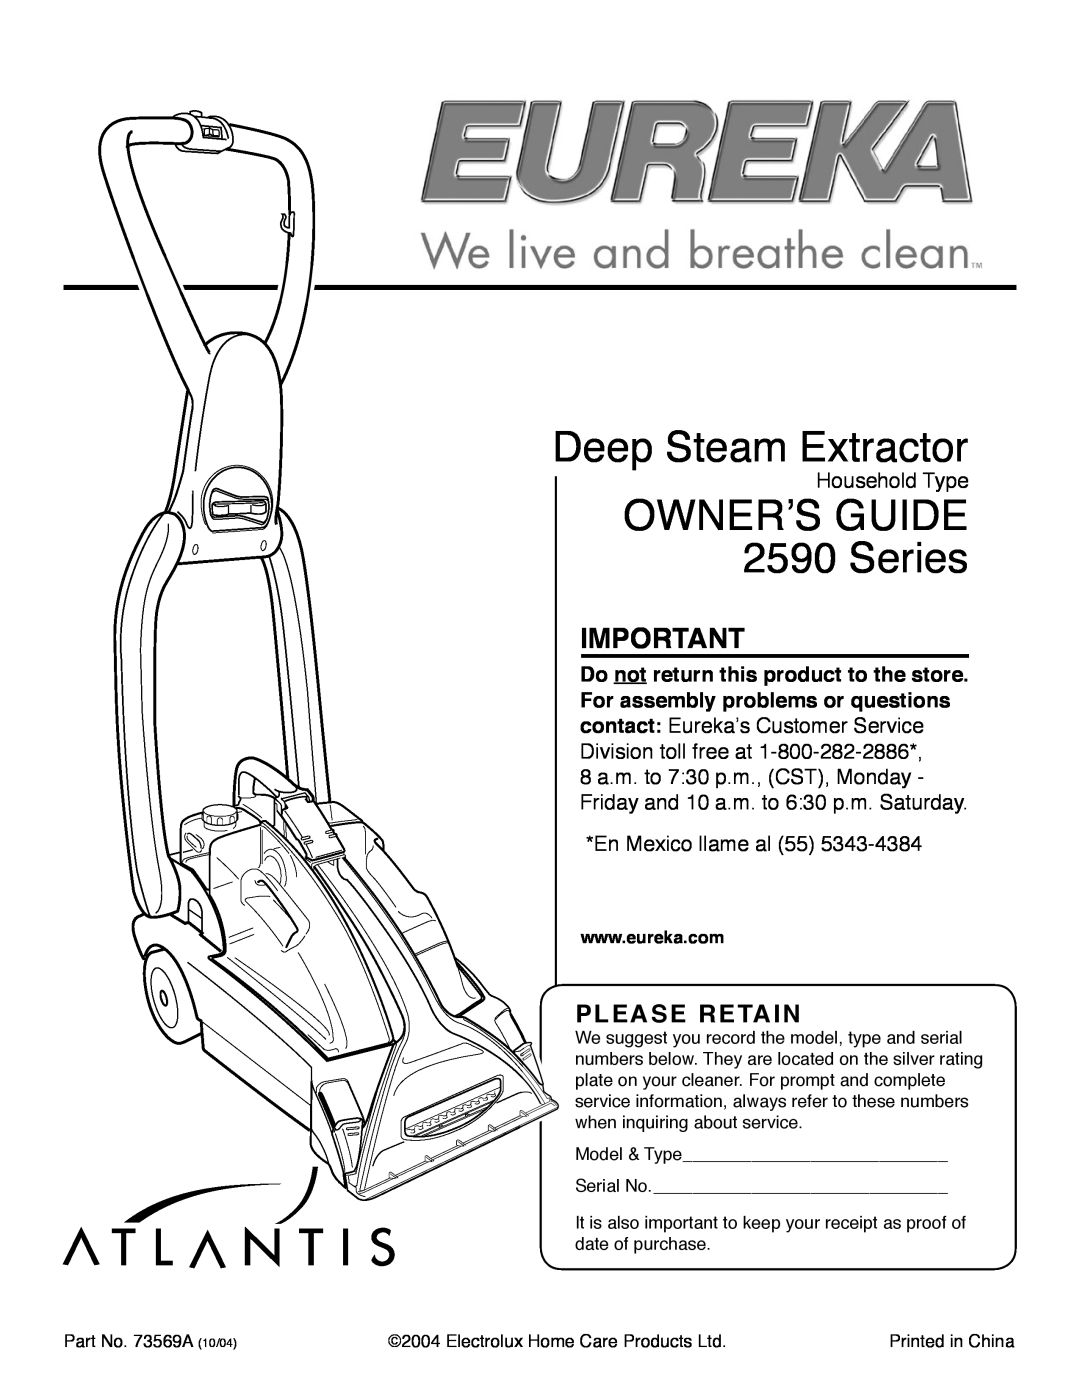 Eureka manual Please Retain, Deep Steam Extractor, OWNERʼS GUIDE 2590 Series 